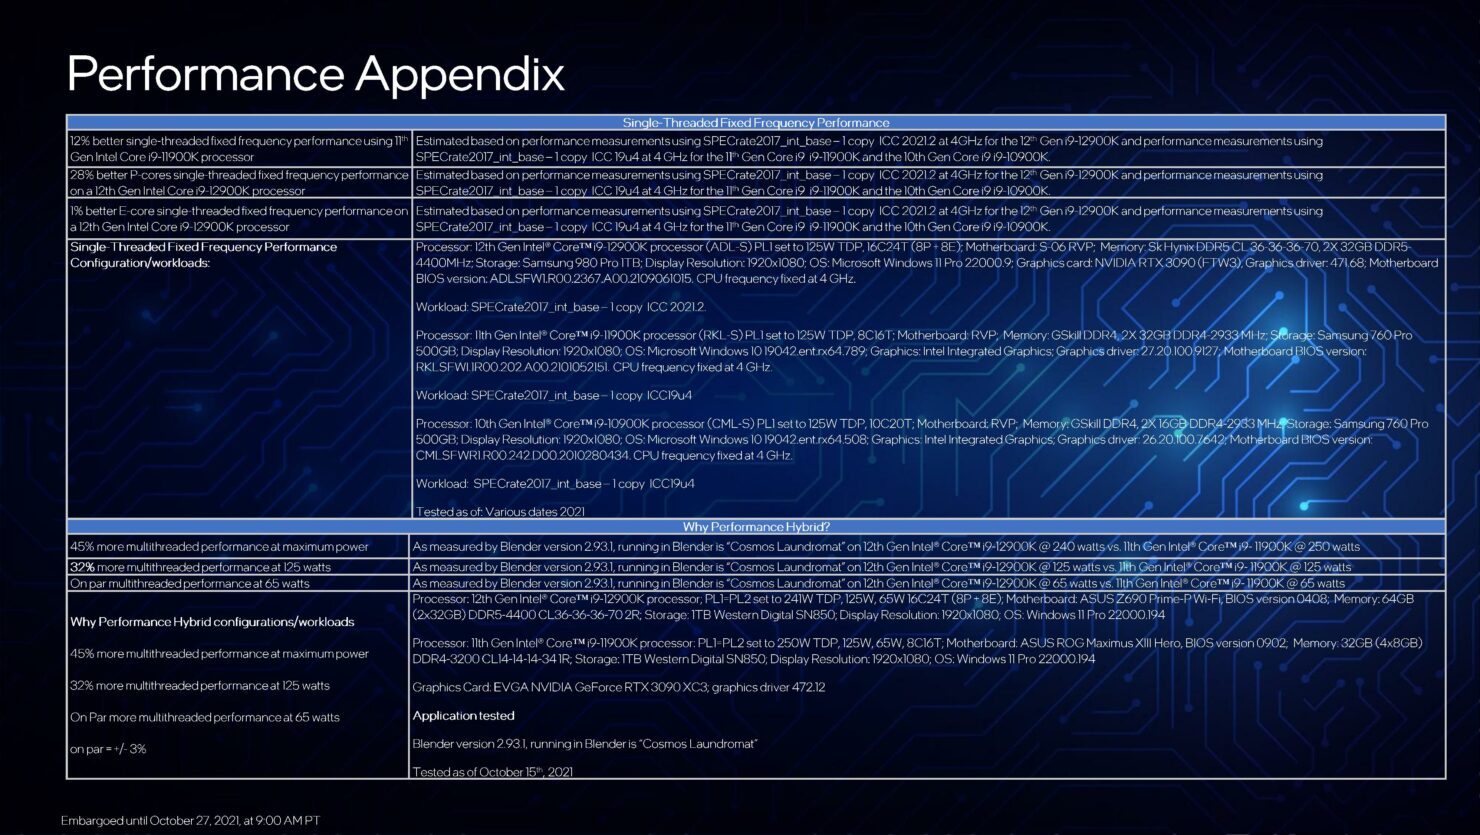 12th-gen-intel-core-desktop-processors-blueprint-presentation-embargoed-until-oct-27-2021-at-9-00am-pt-page-063